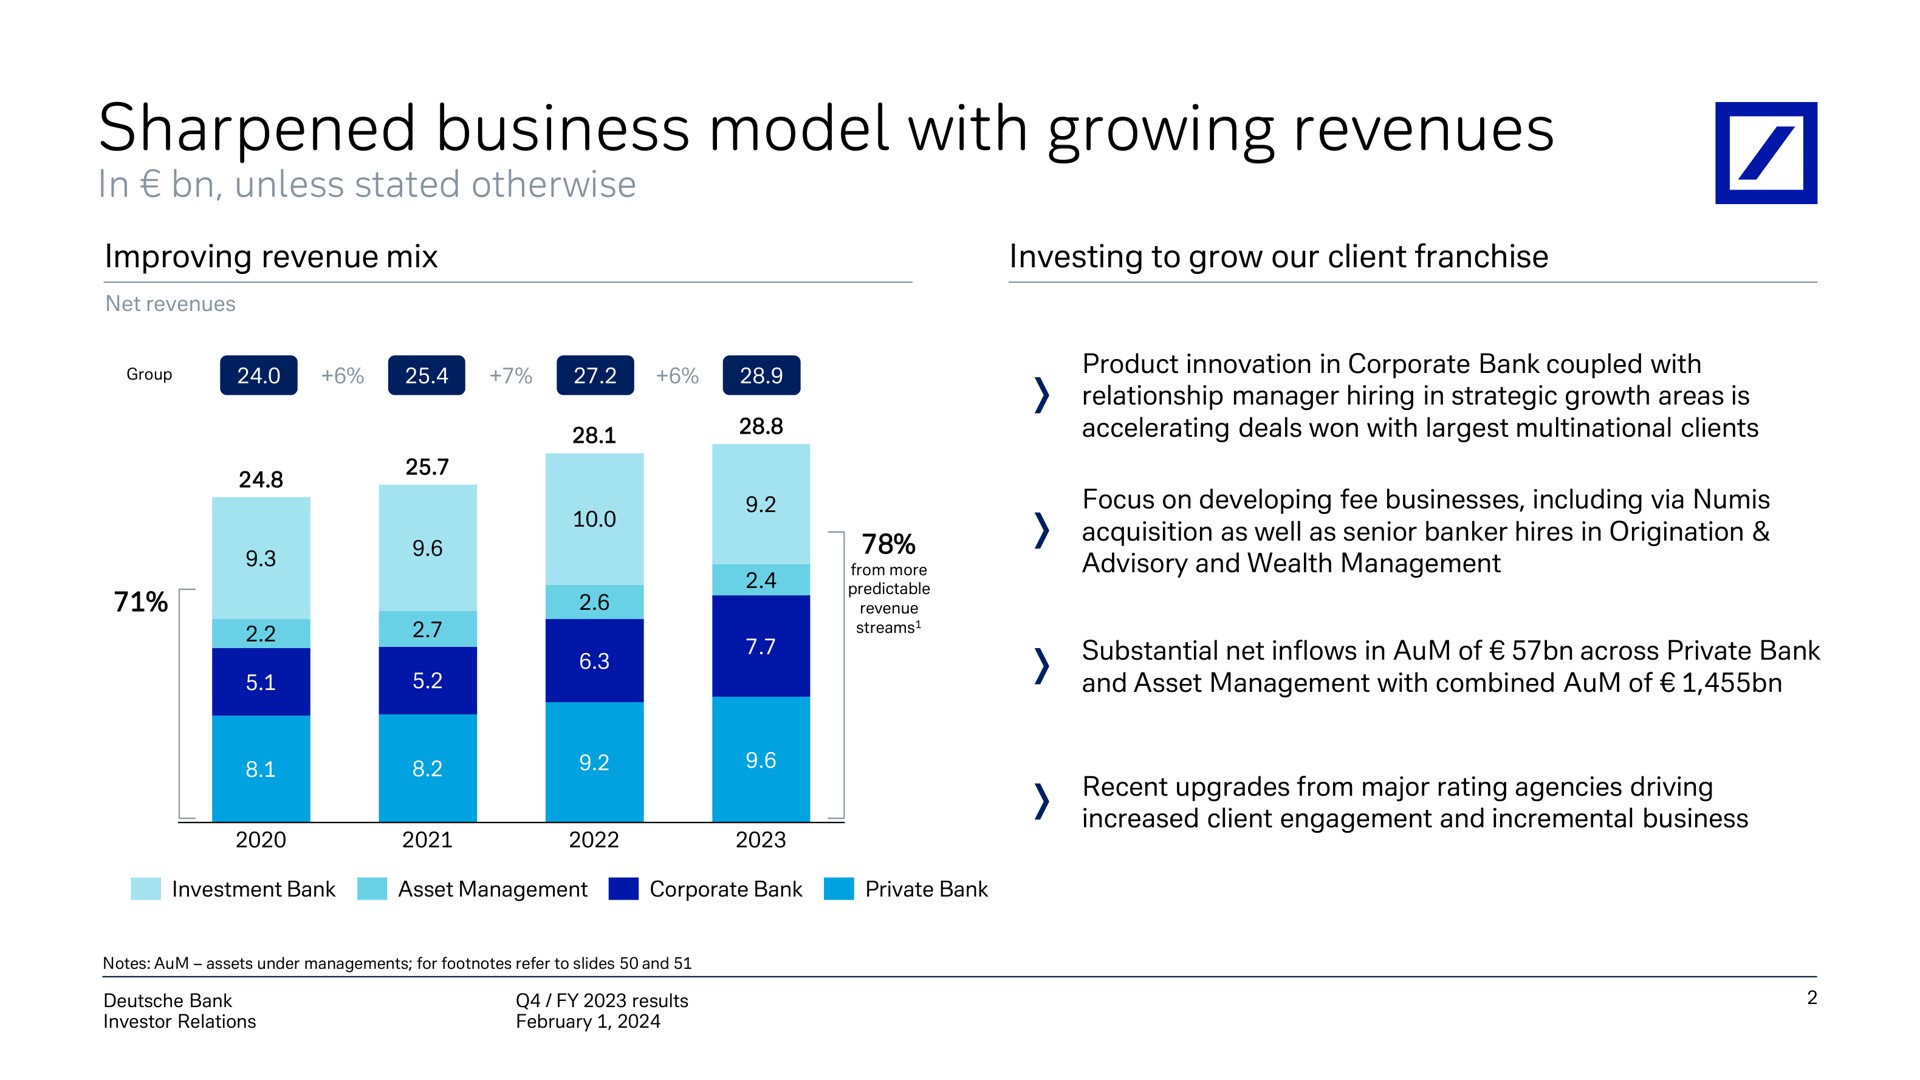 sharpened business model with growing revenues | Deutsche Bank